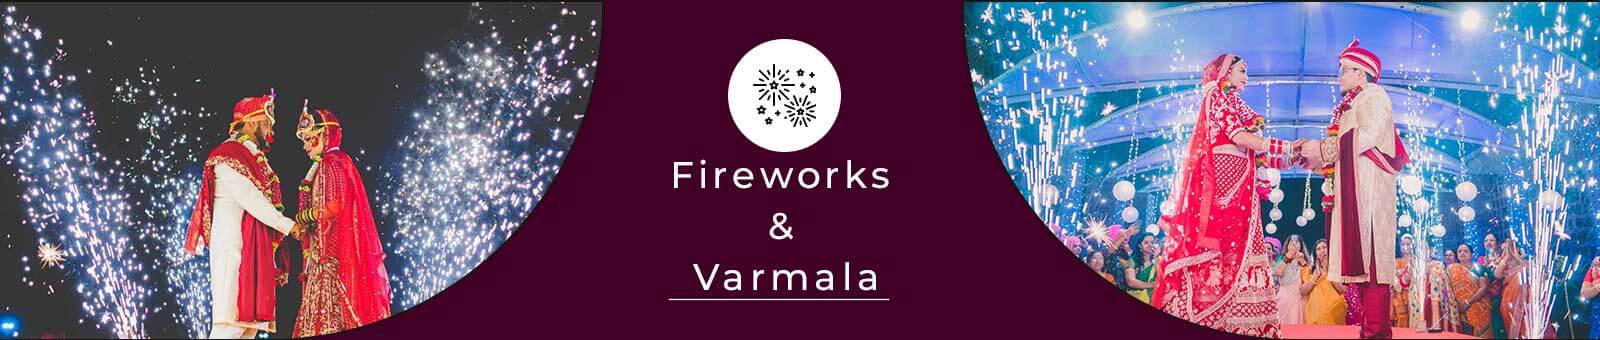 Vermala & Fireworks Services in Jaipur